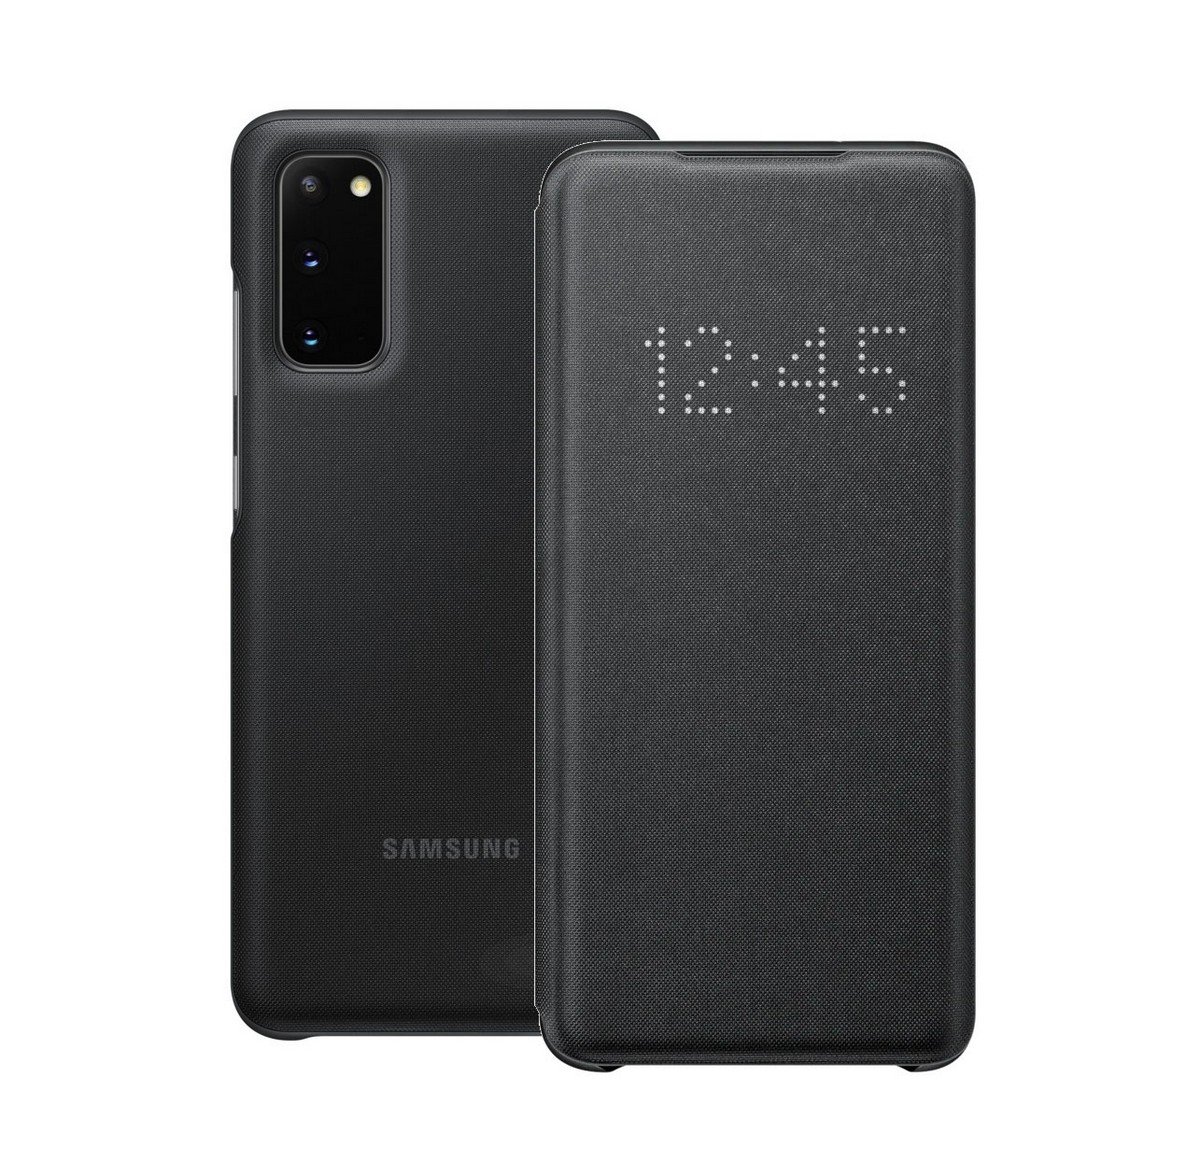 Etui Samsung LED View Cover Black do Galaxy S20 EF-NG980PBEGEU. Trzymaj się tego, co ważne.